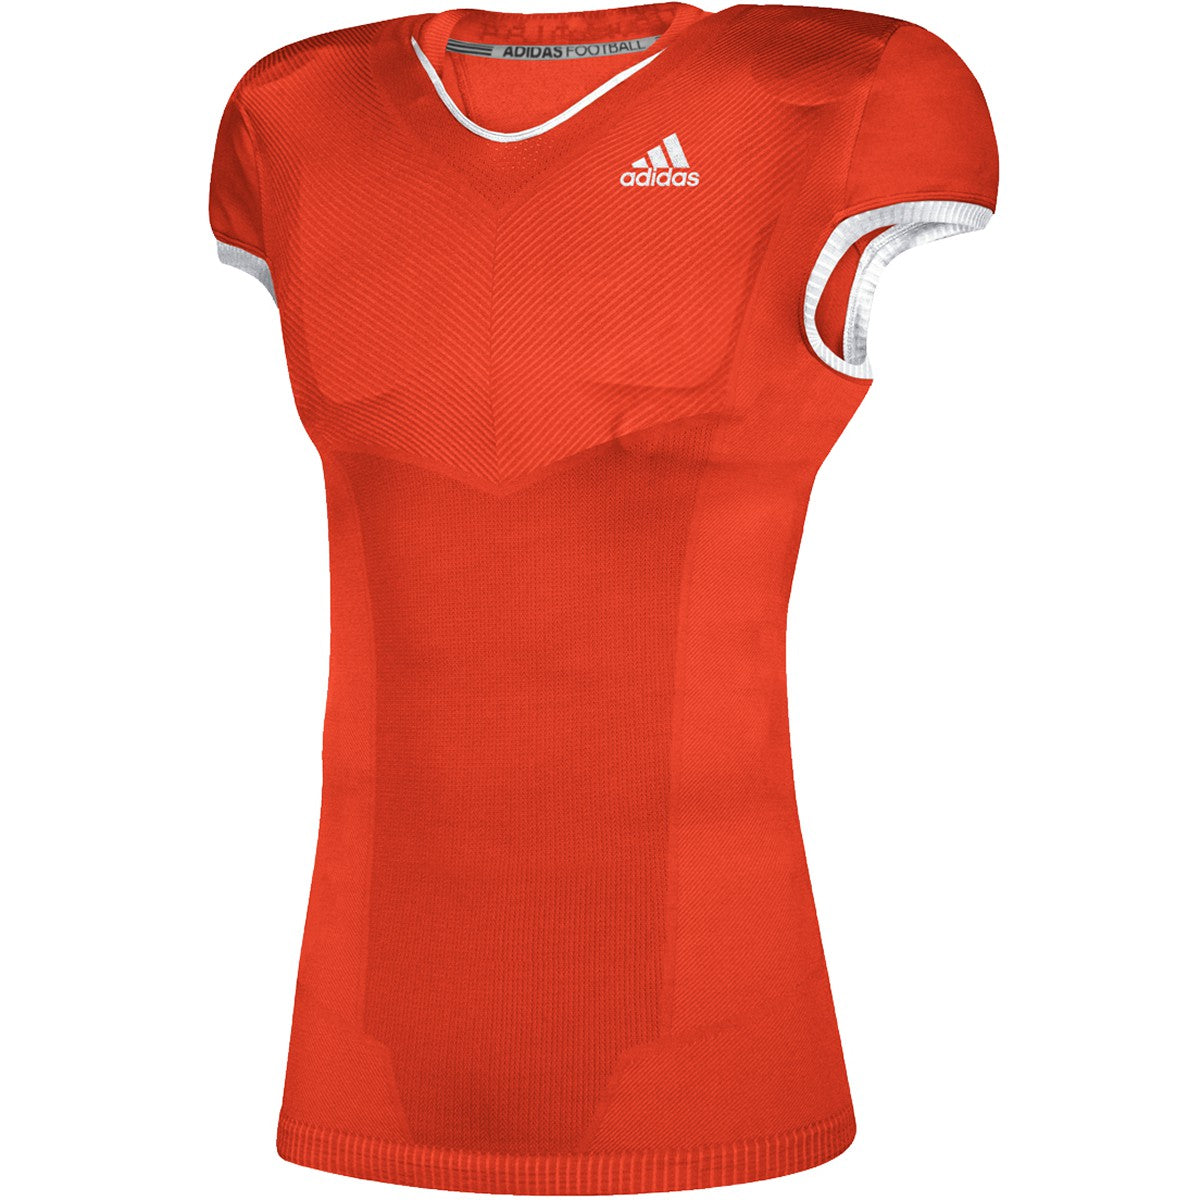 Adidas Men's Primeknit A1 Football Jersey, Orange / XL